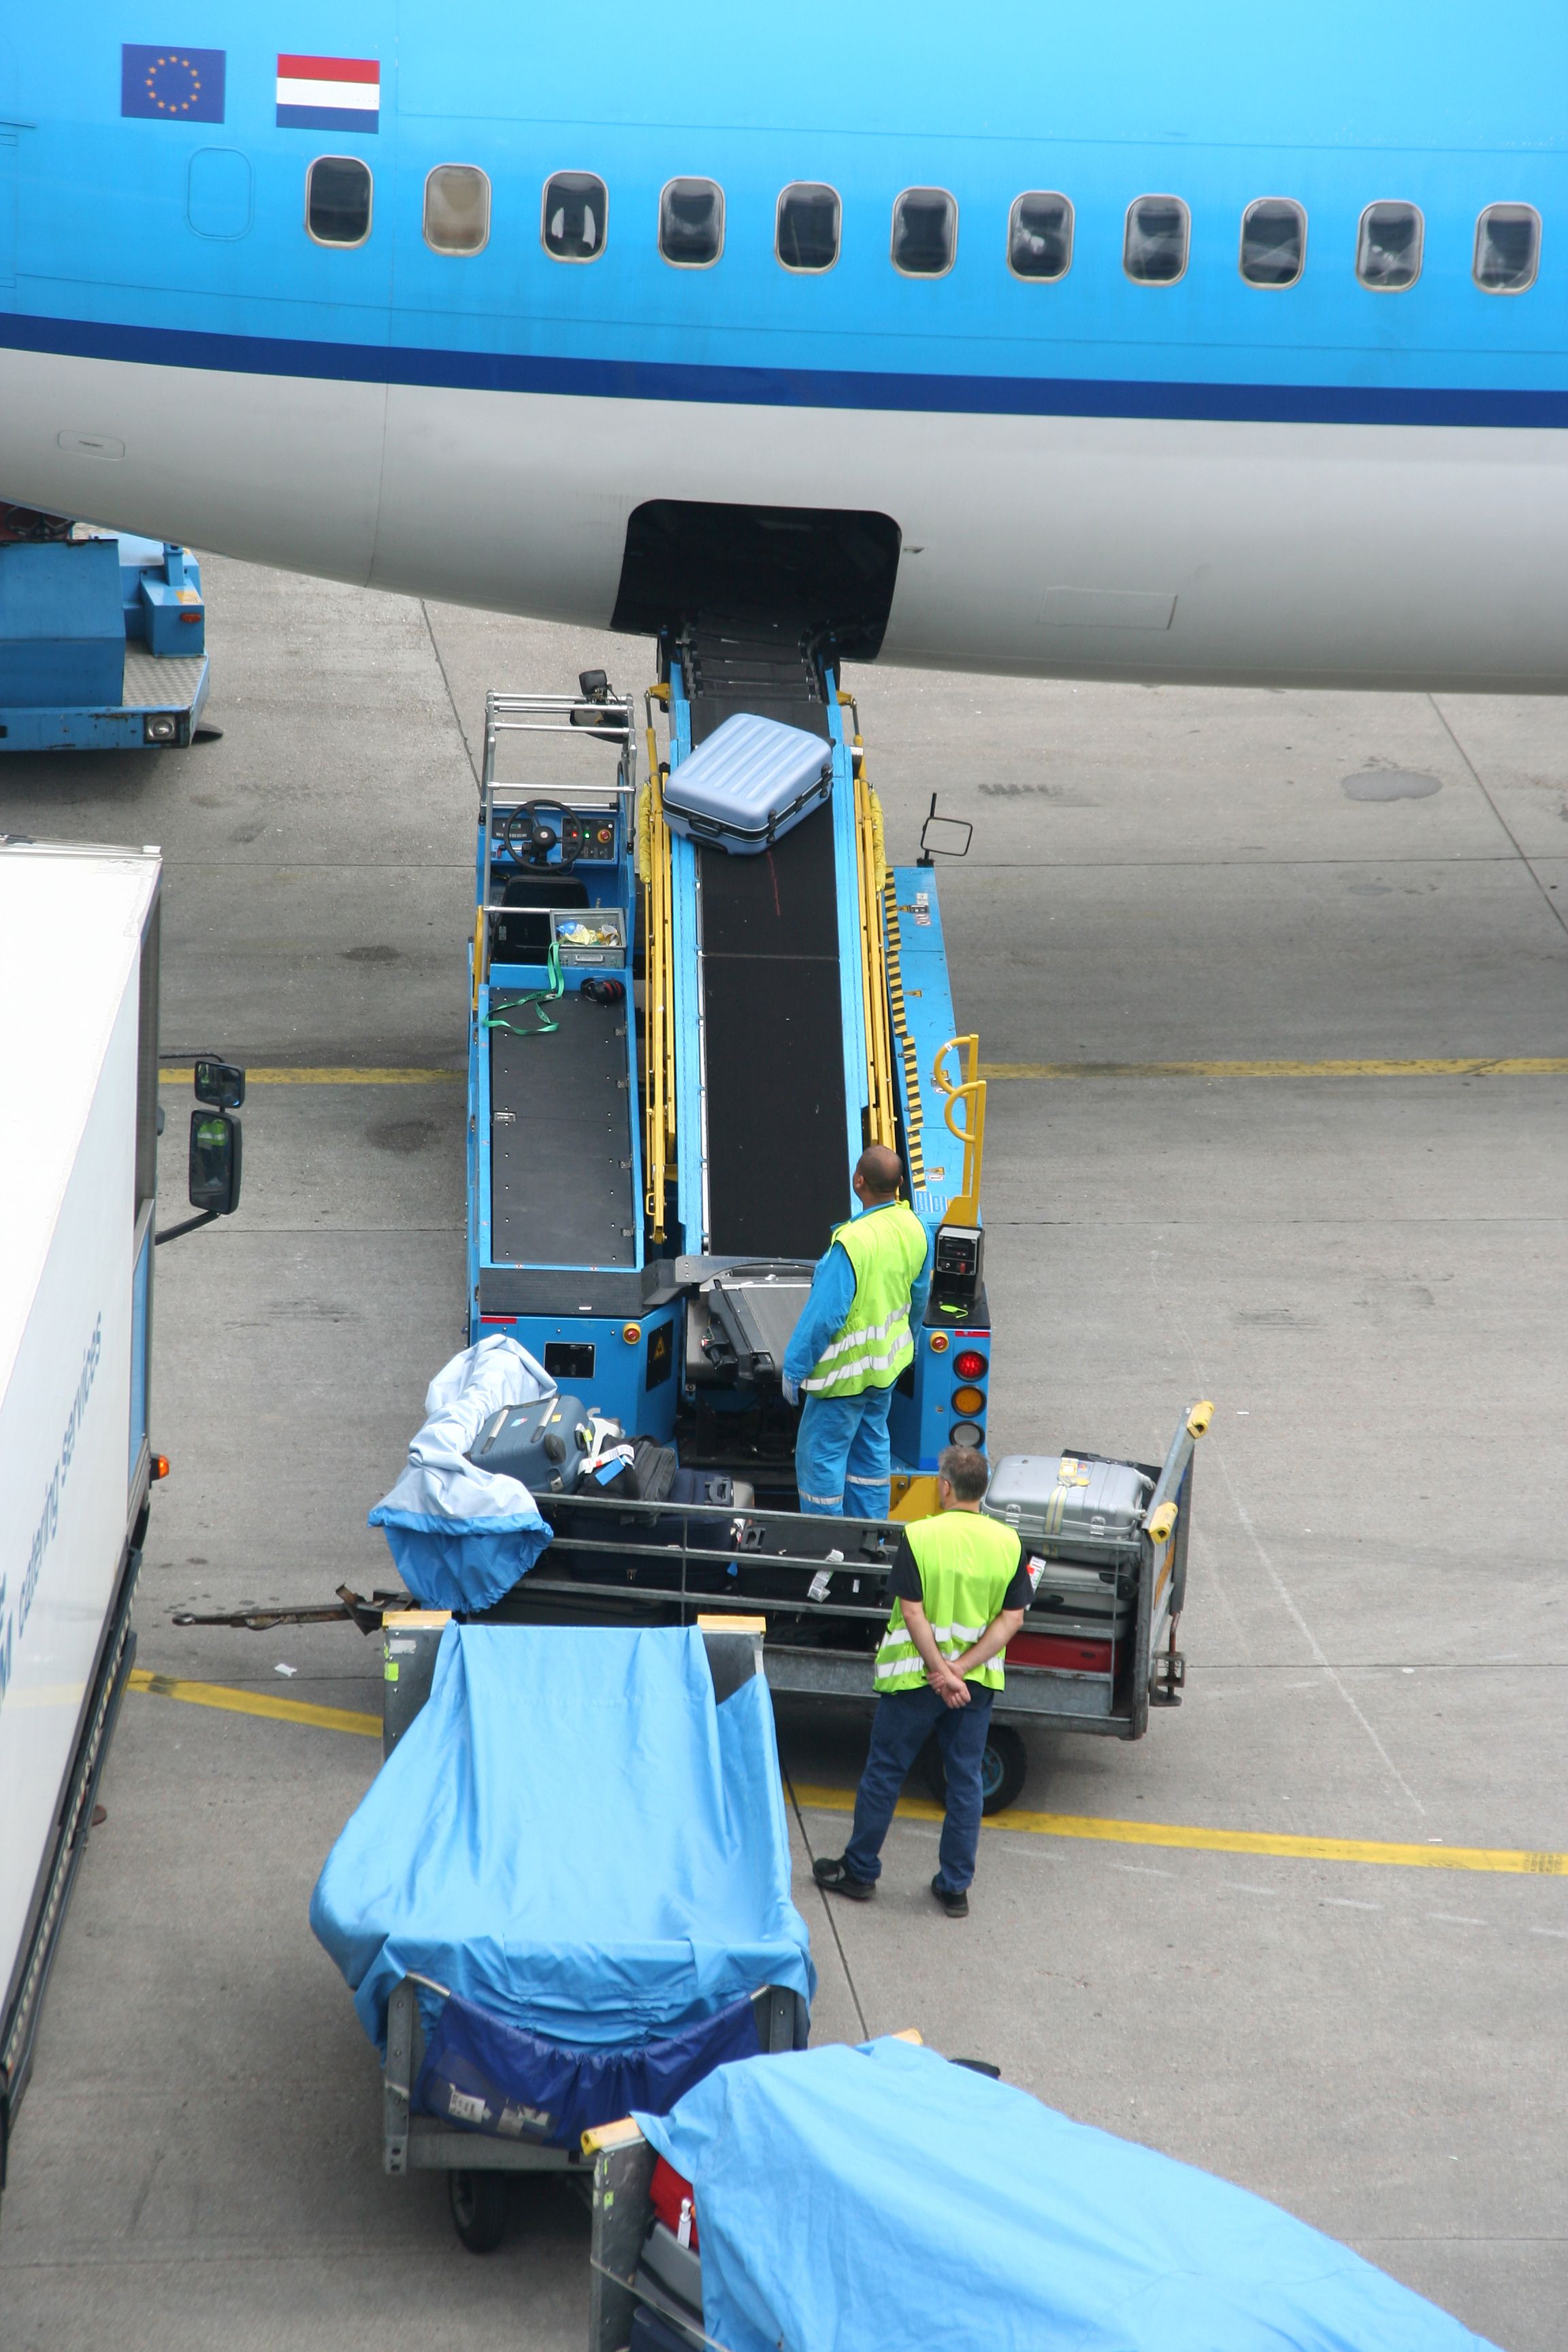 KLM baggage handlers unloading aircraft